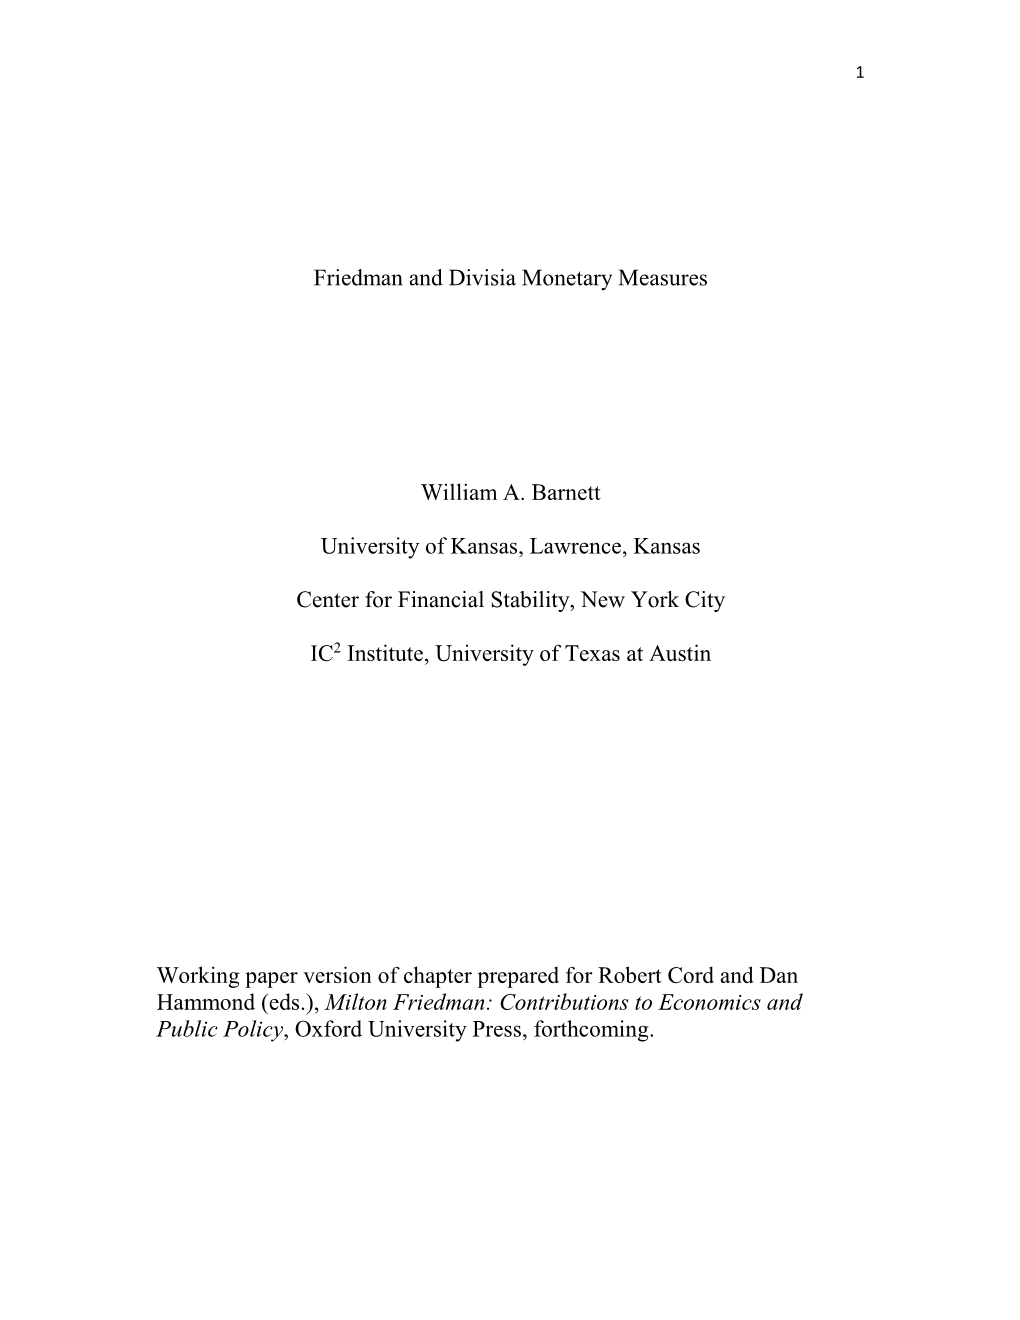 Friedman and Divisia Monetary Measures William A. Barnett